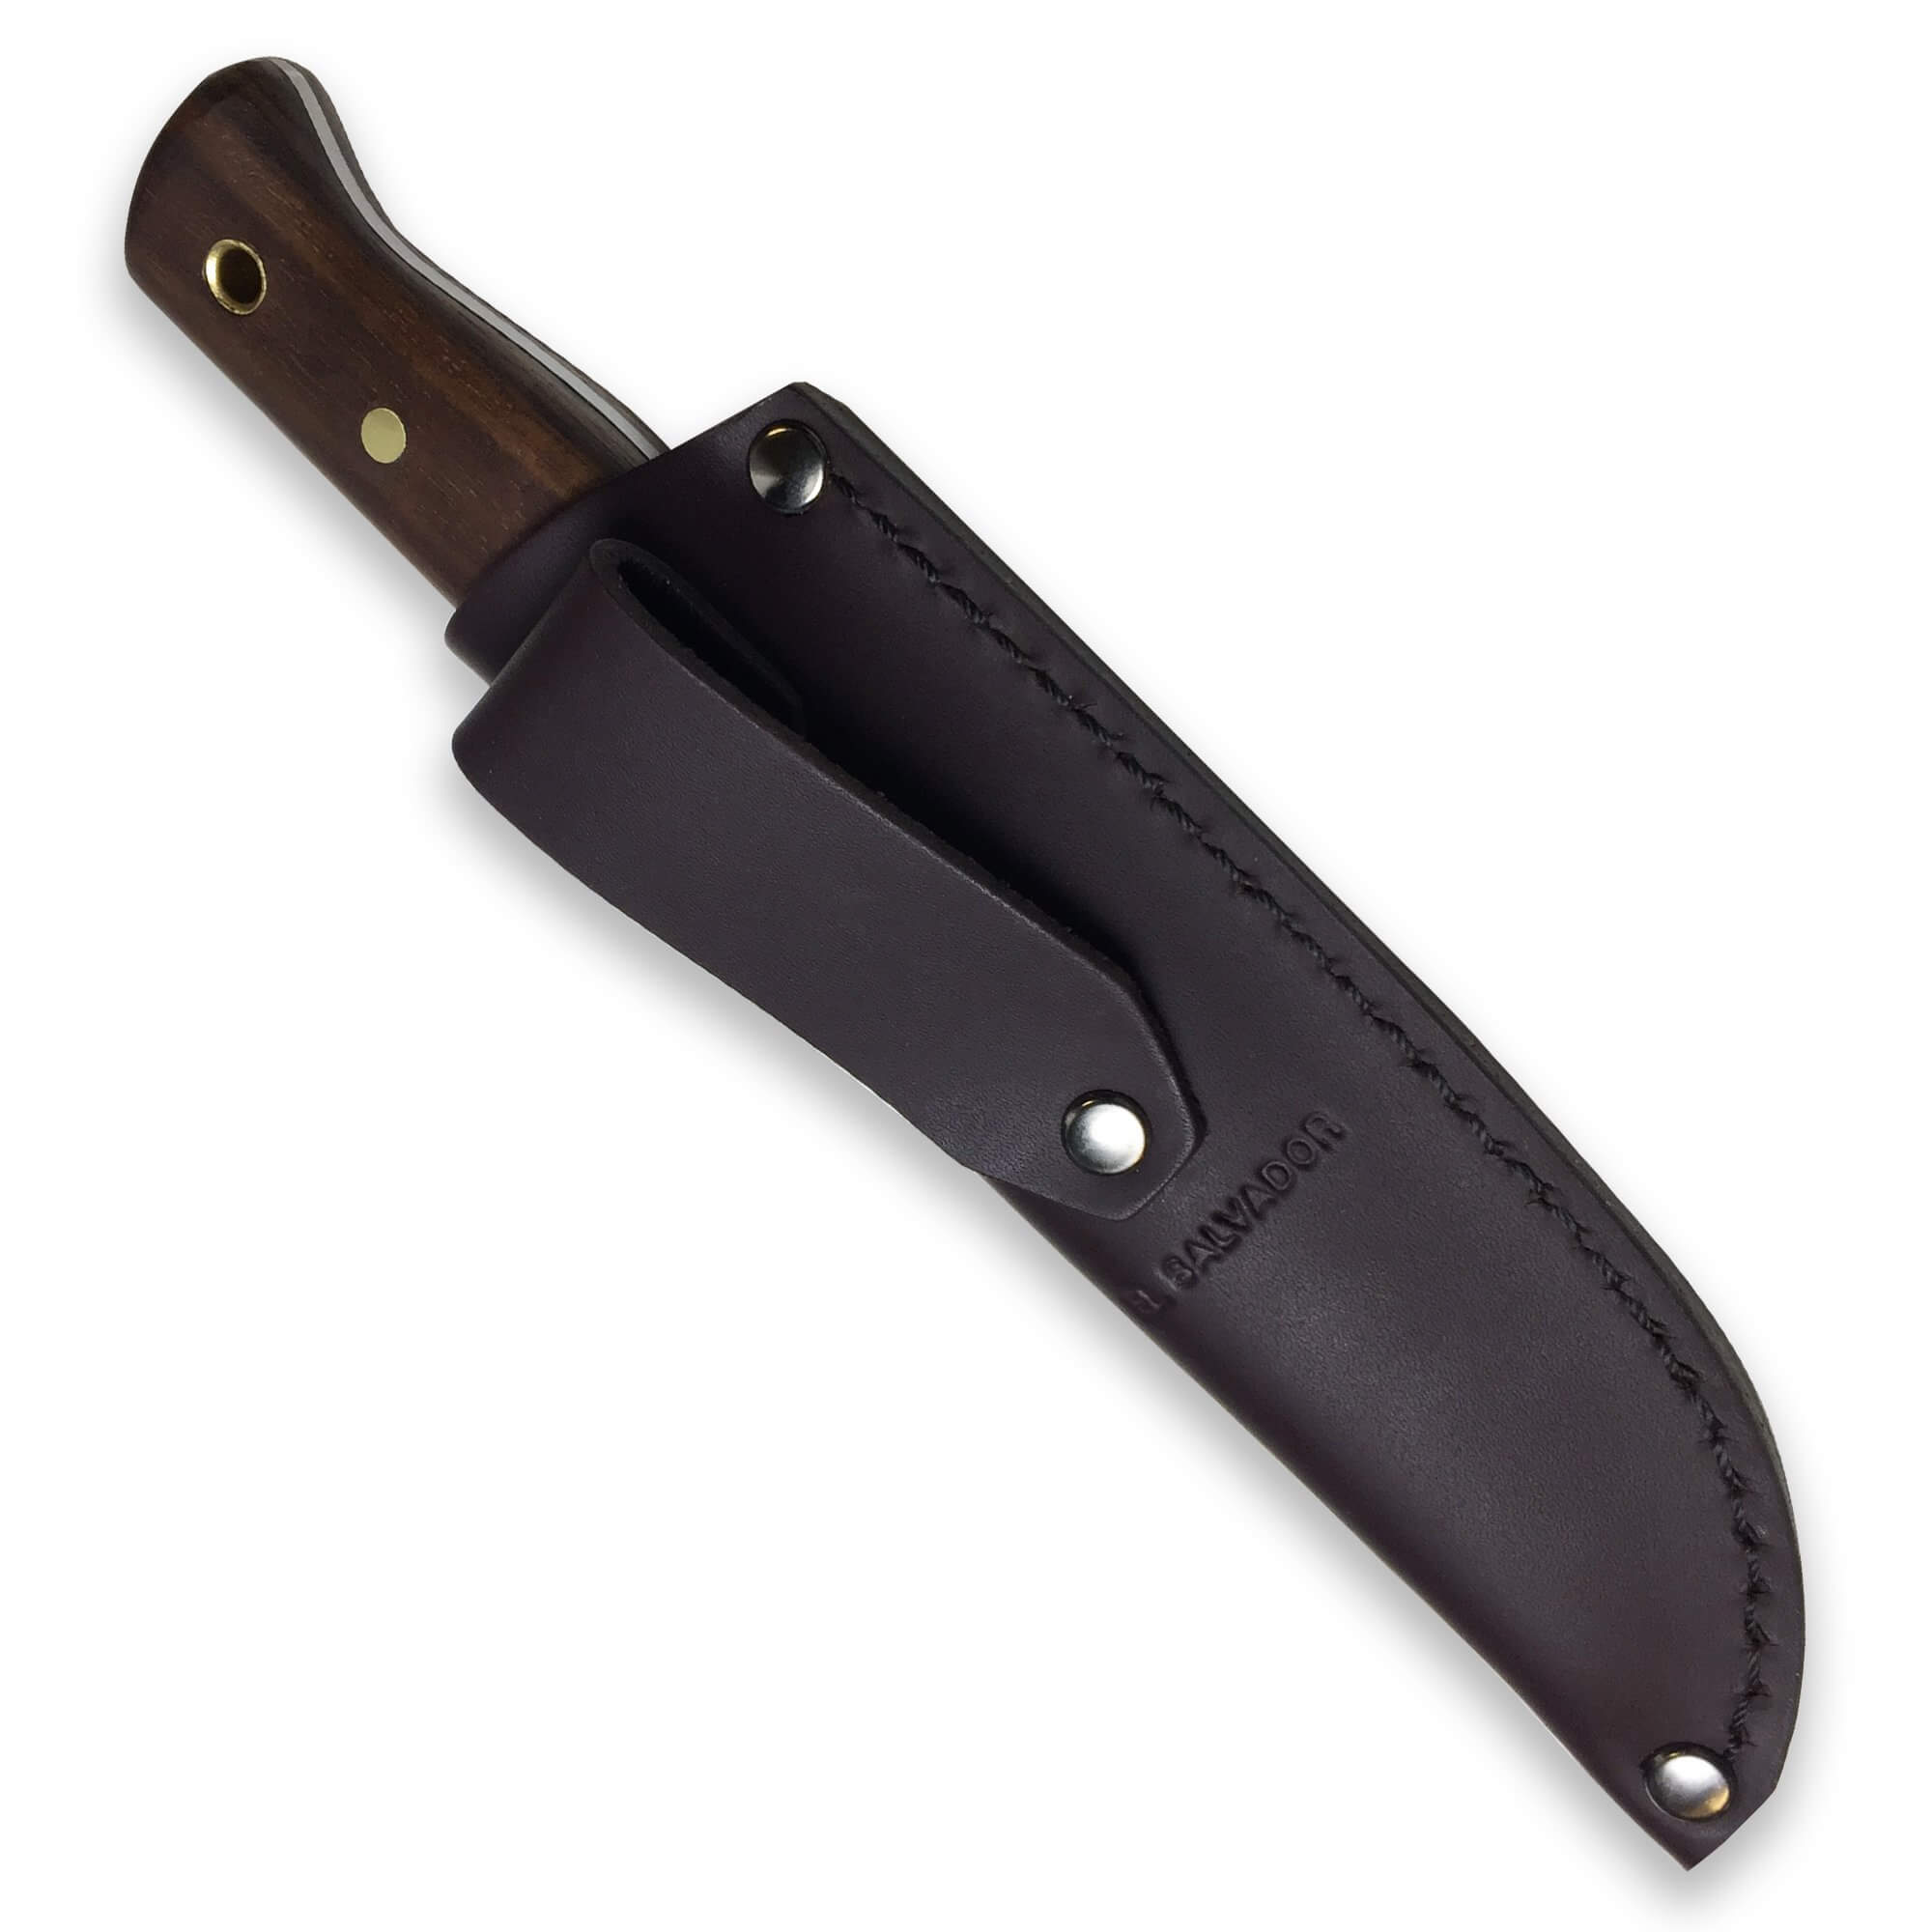 Condor Tool & Knife, Bushlore Camp Knife, best bushcraft knife under 100, best bushcraft knife 2020, bushcraft skills